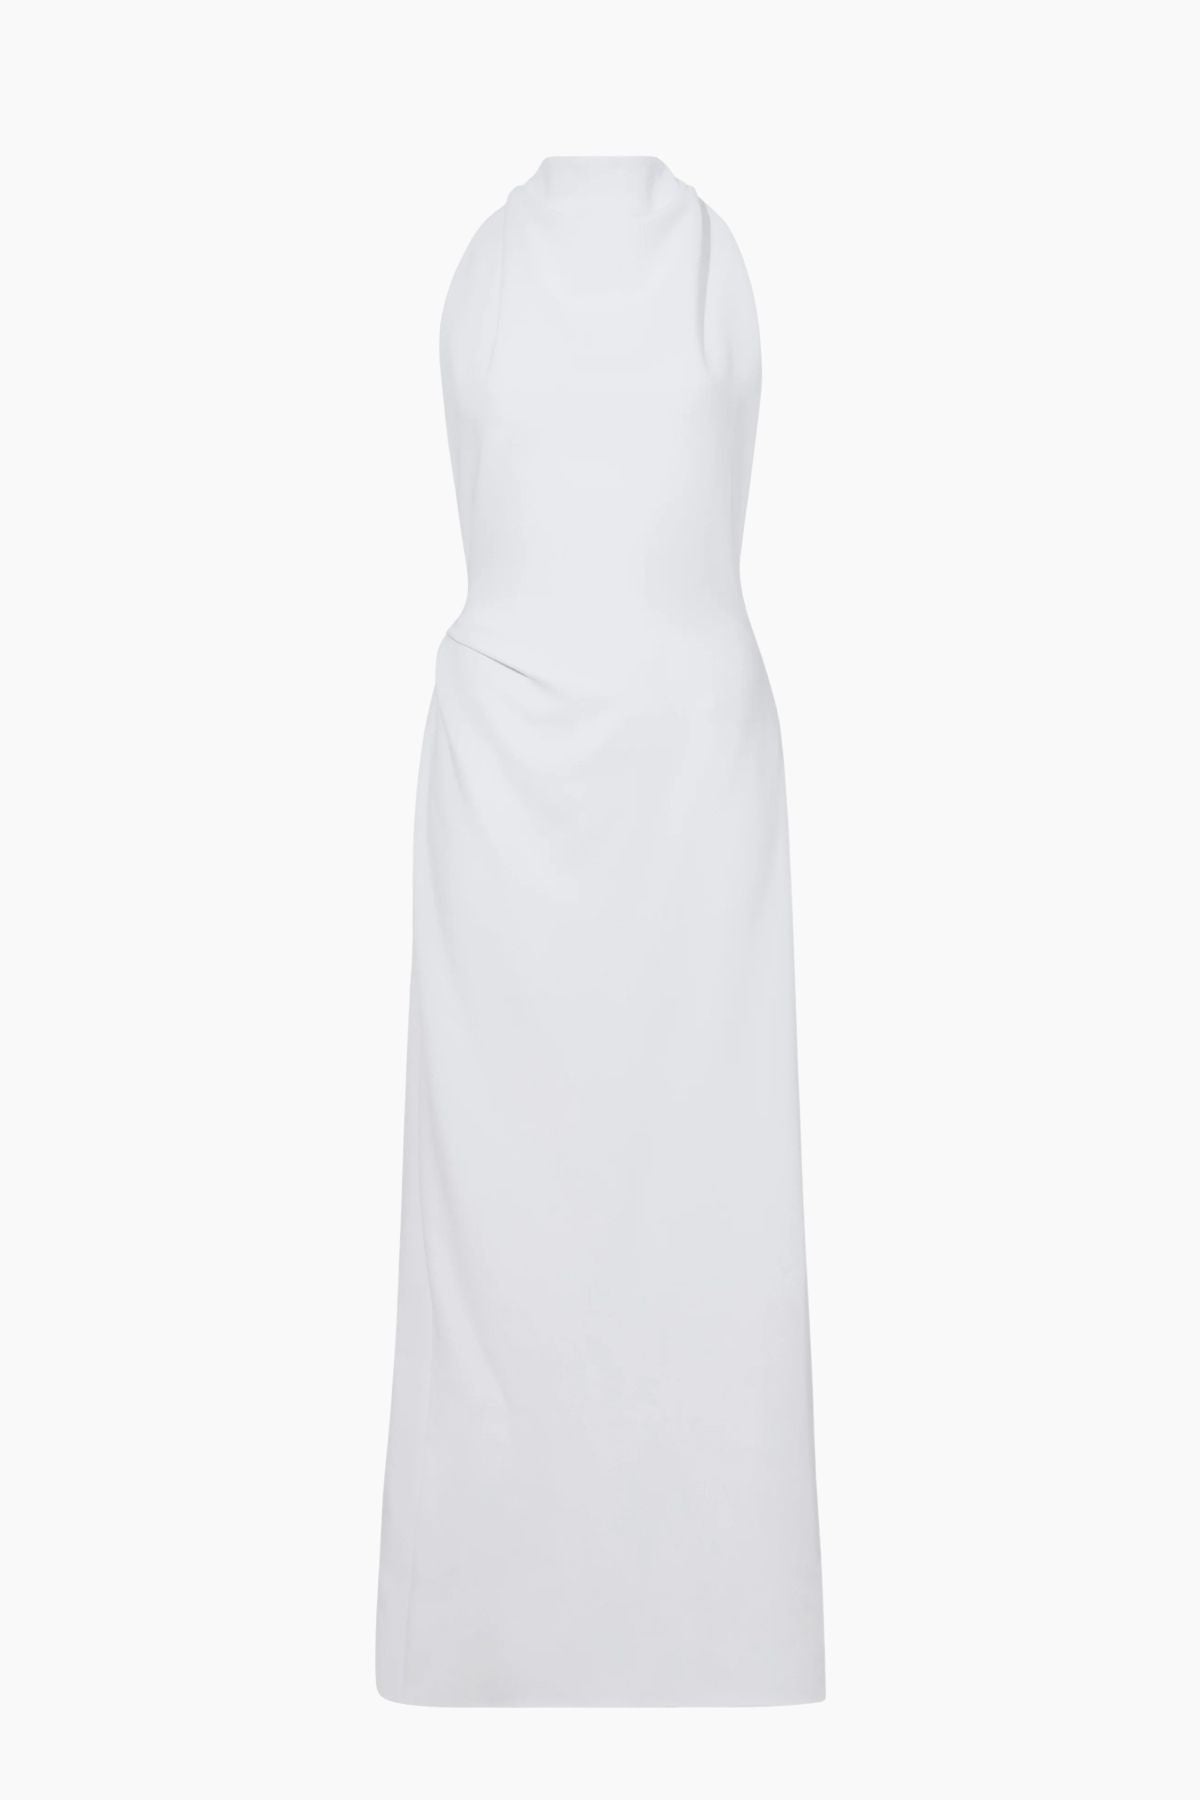 Proenza Schouler Selena Twist Back Dress - White